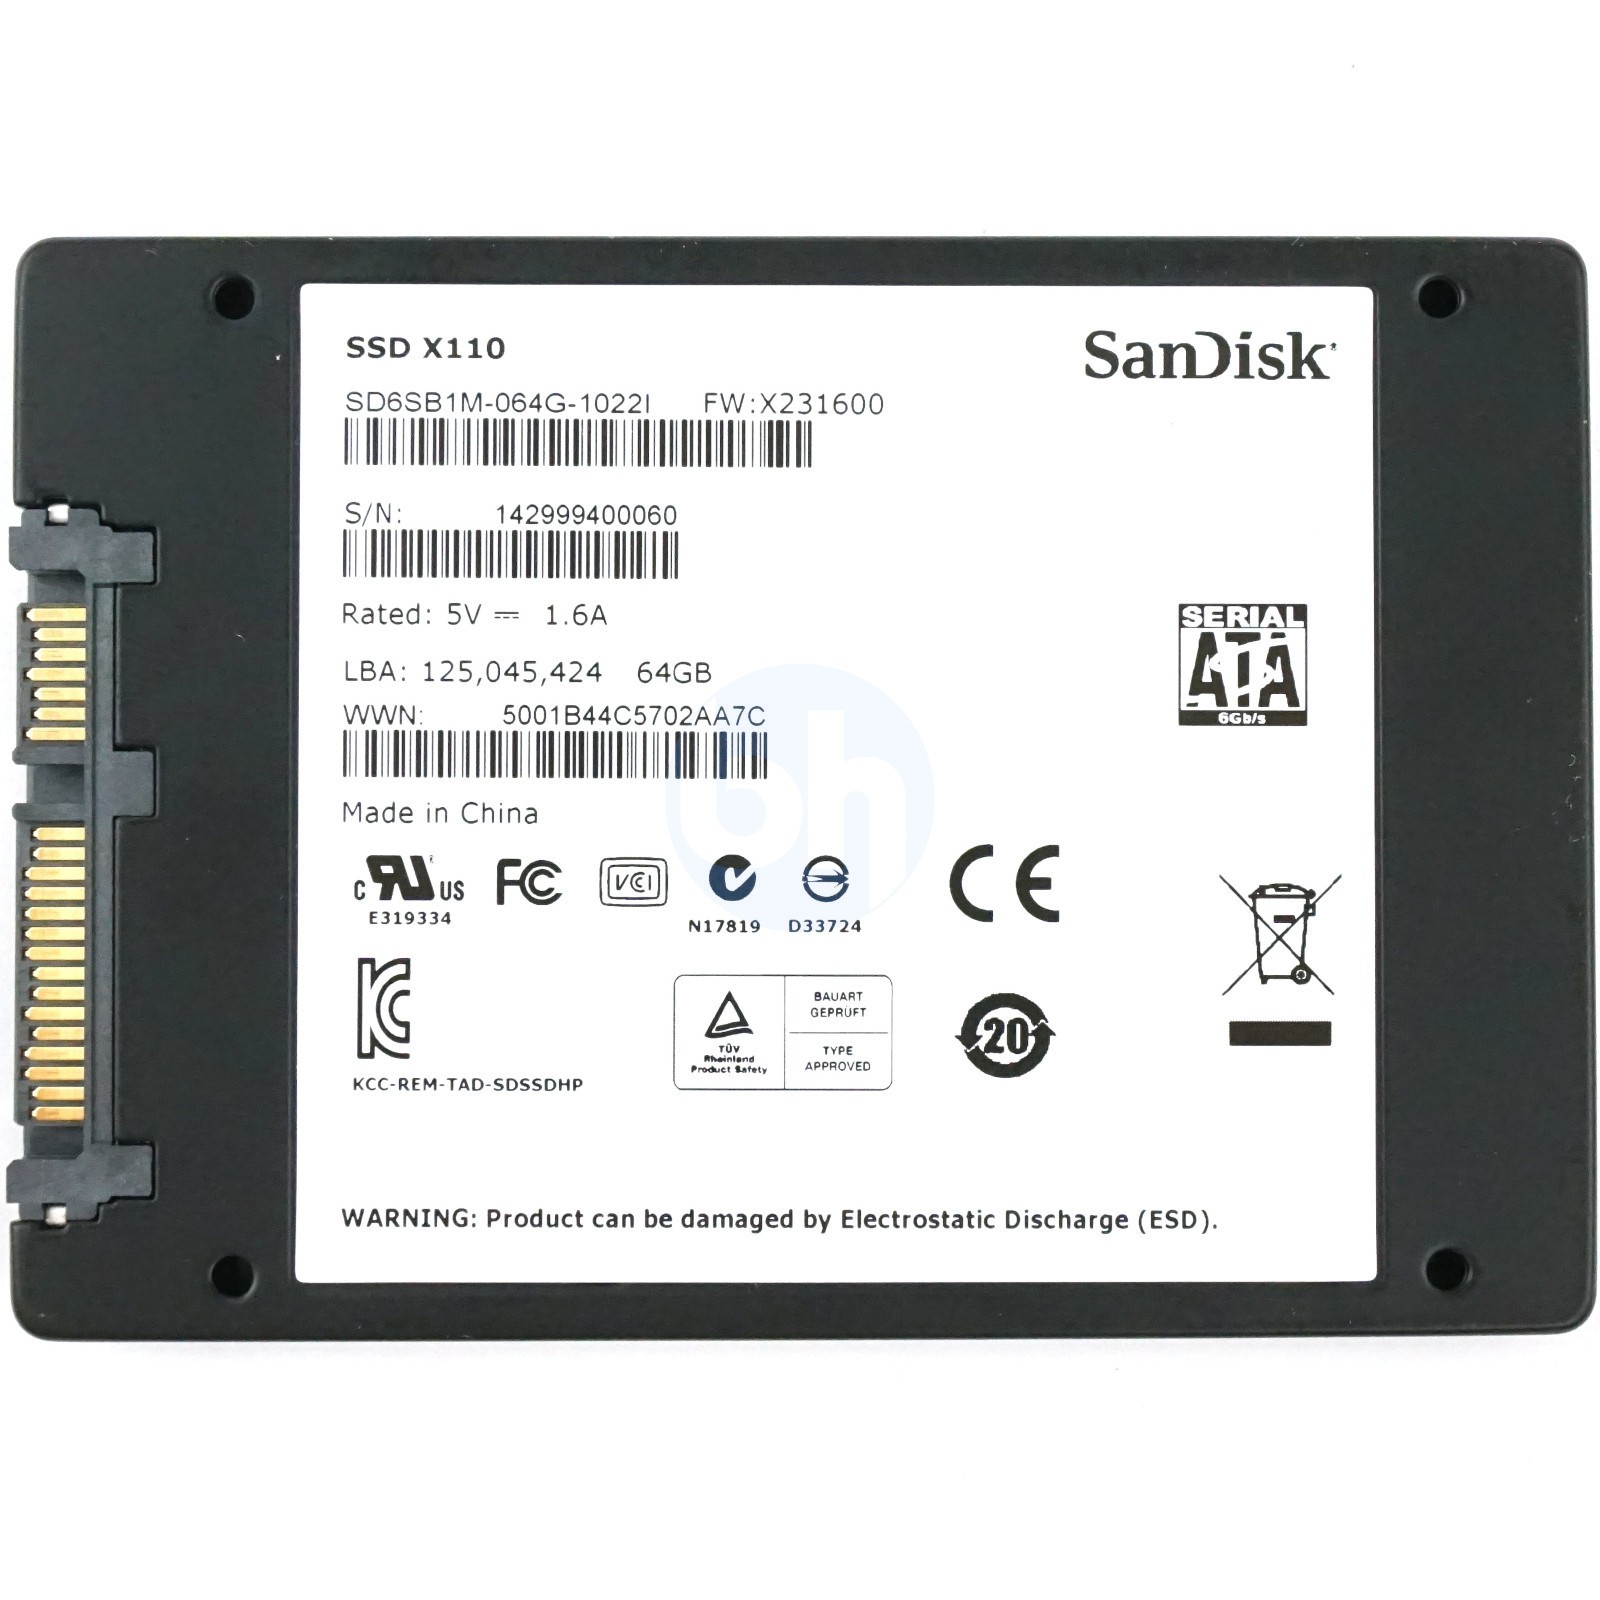 Psychologically benefit Adventurer SanDisk (SD6SB1M-064G-1022I) - 64GB X110 (SFF 2.5in) SATA-III 6Gbps SSD